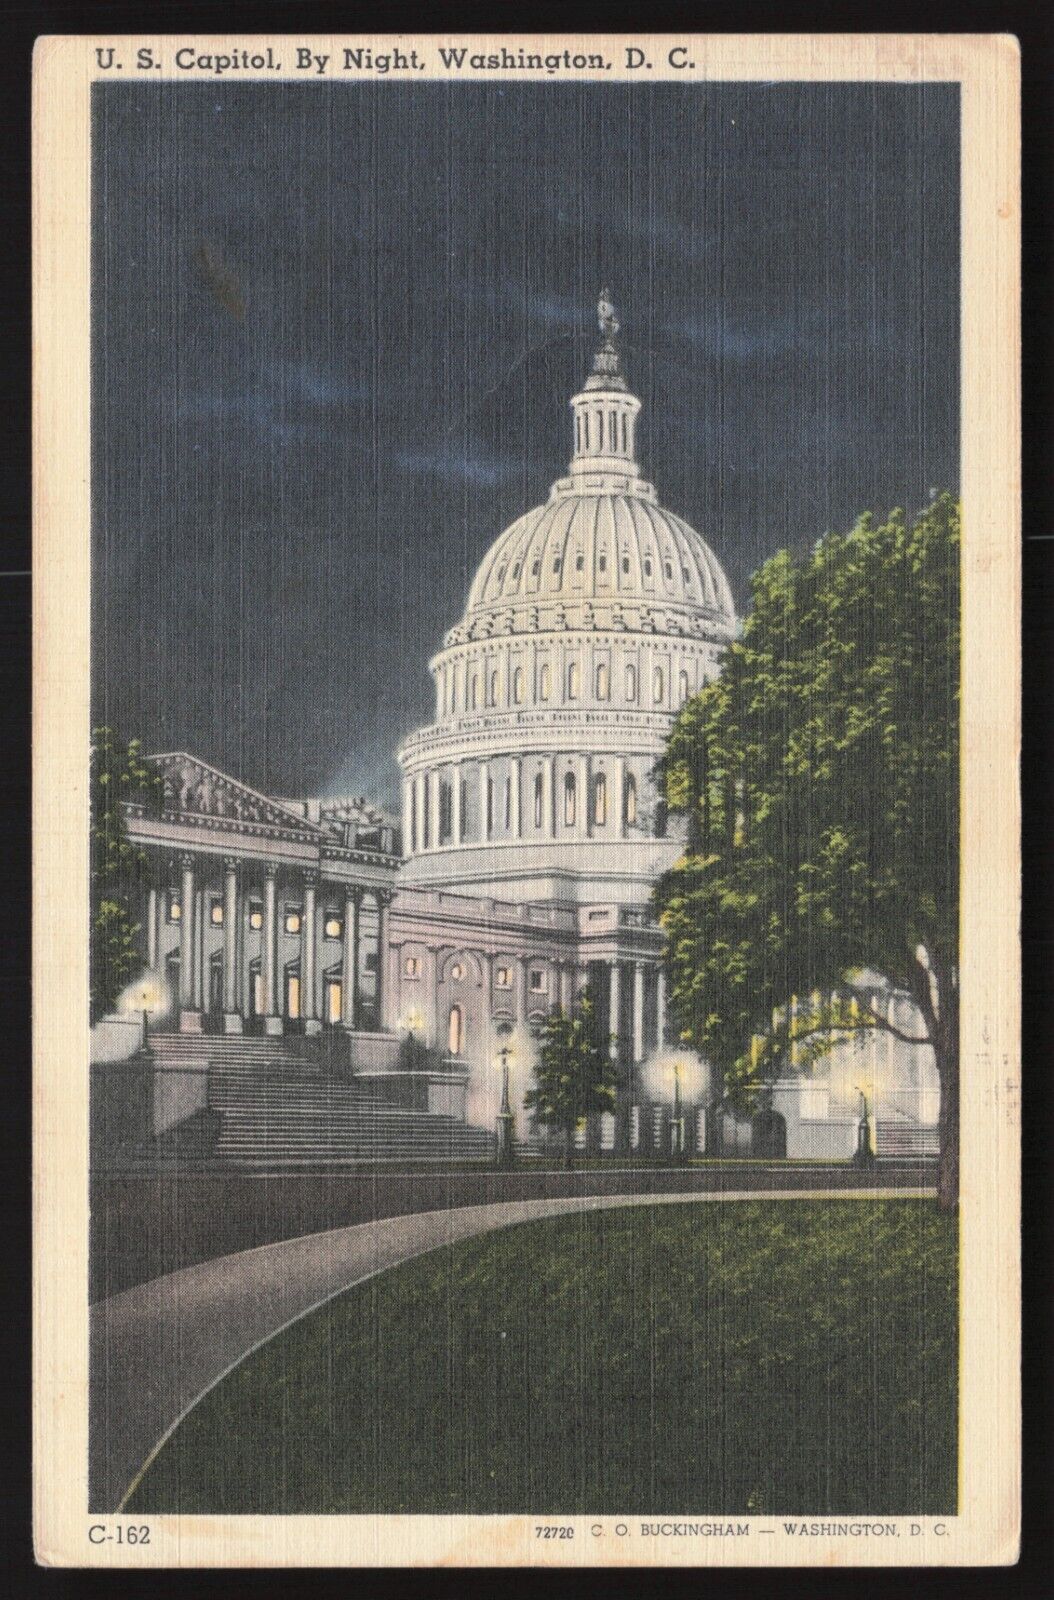 Vintage Postcard - U.S. Capitol By Night, Washington, D.C.